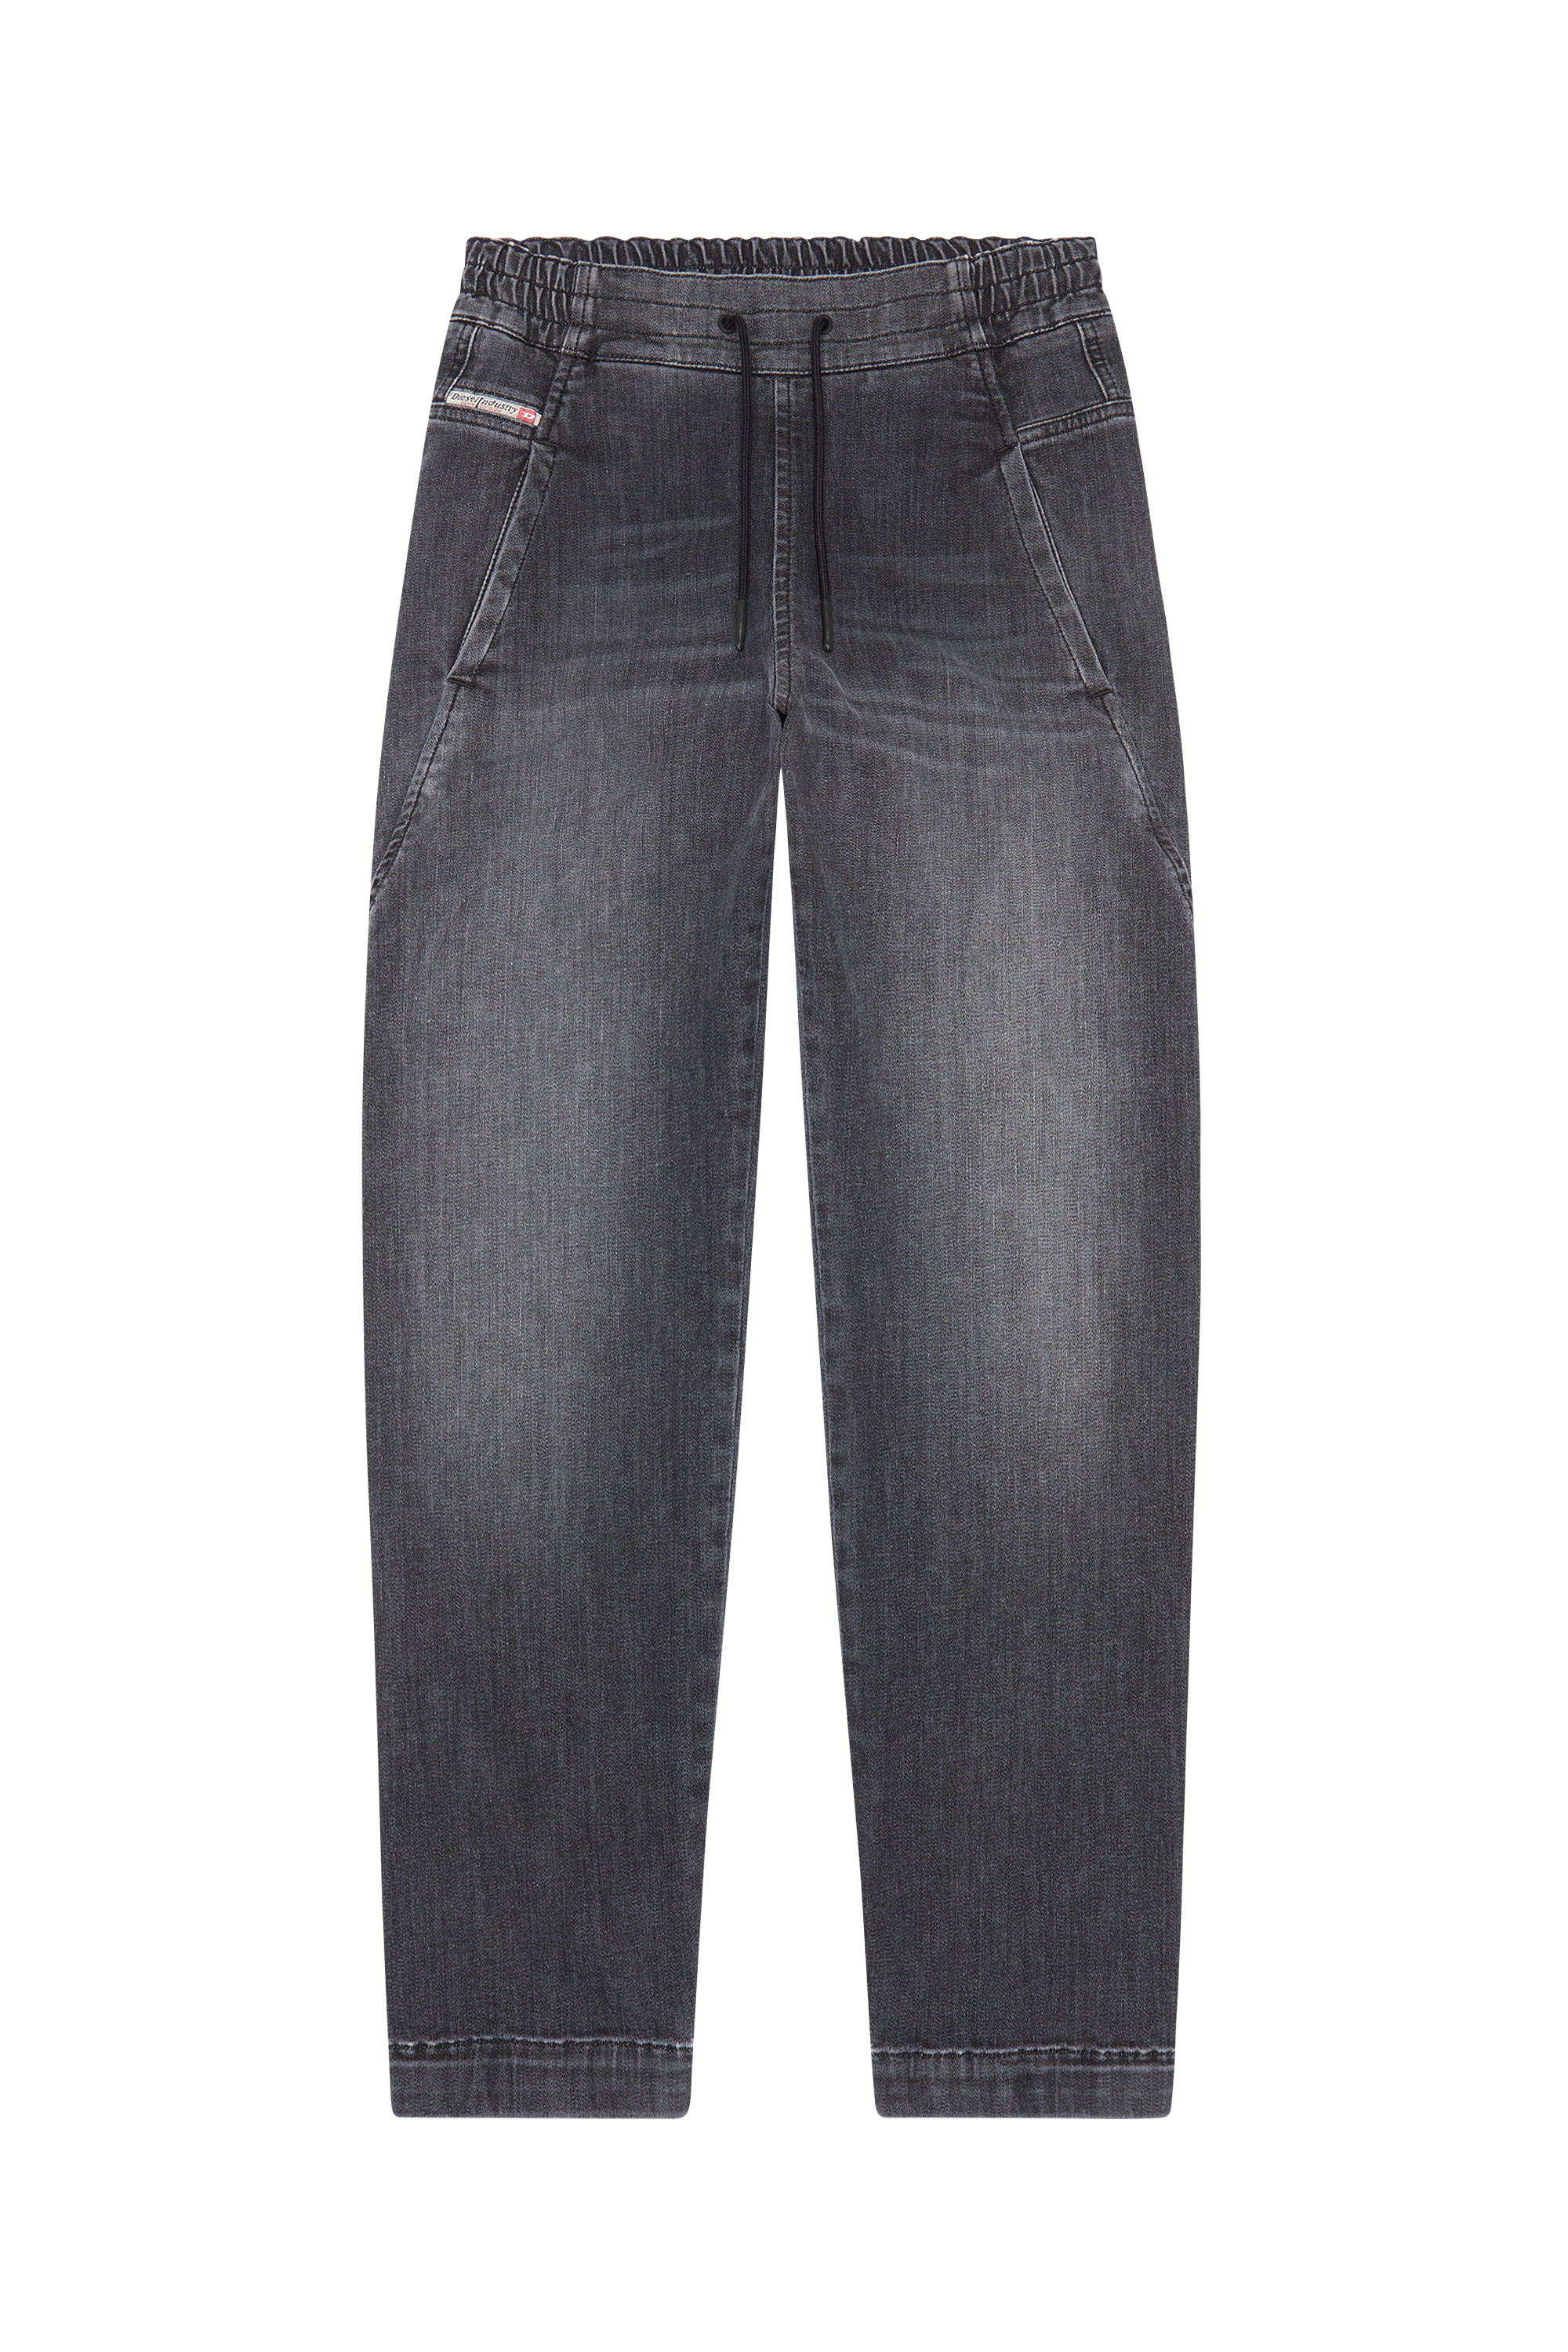 Krailey JoggJeans® 09D52 Boyfriend, Black/Dark grey - Jeans